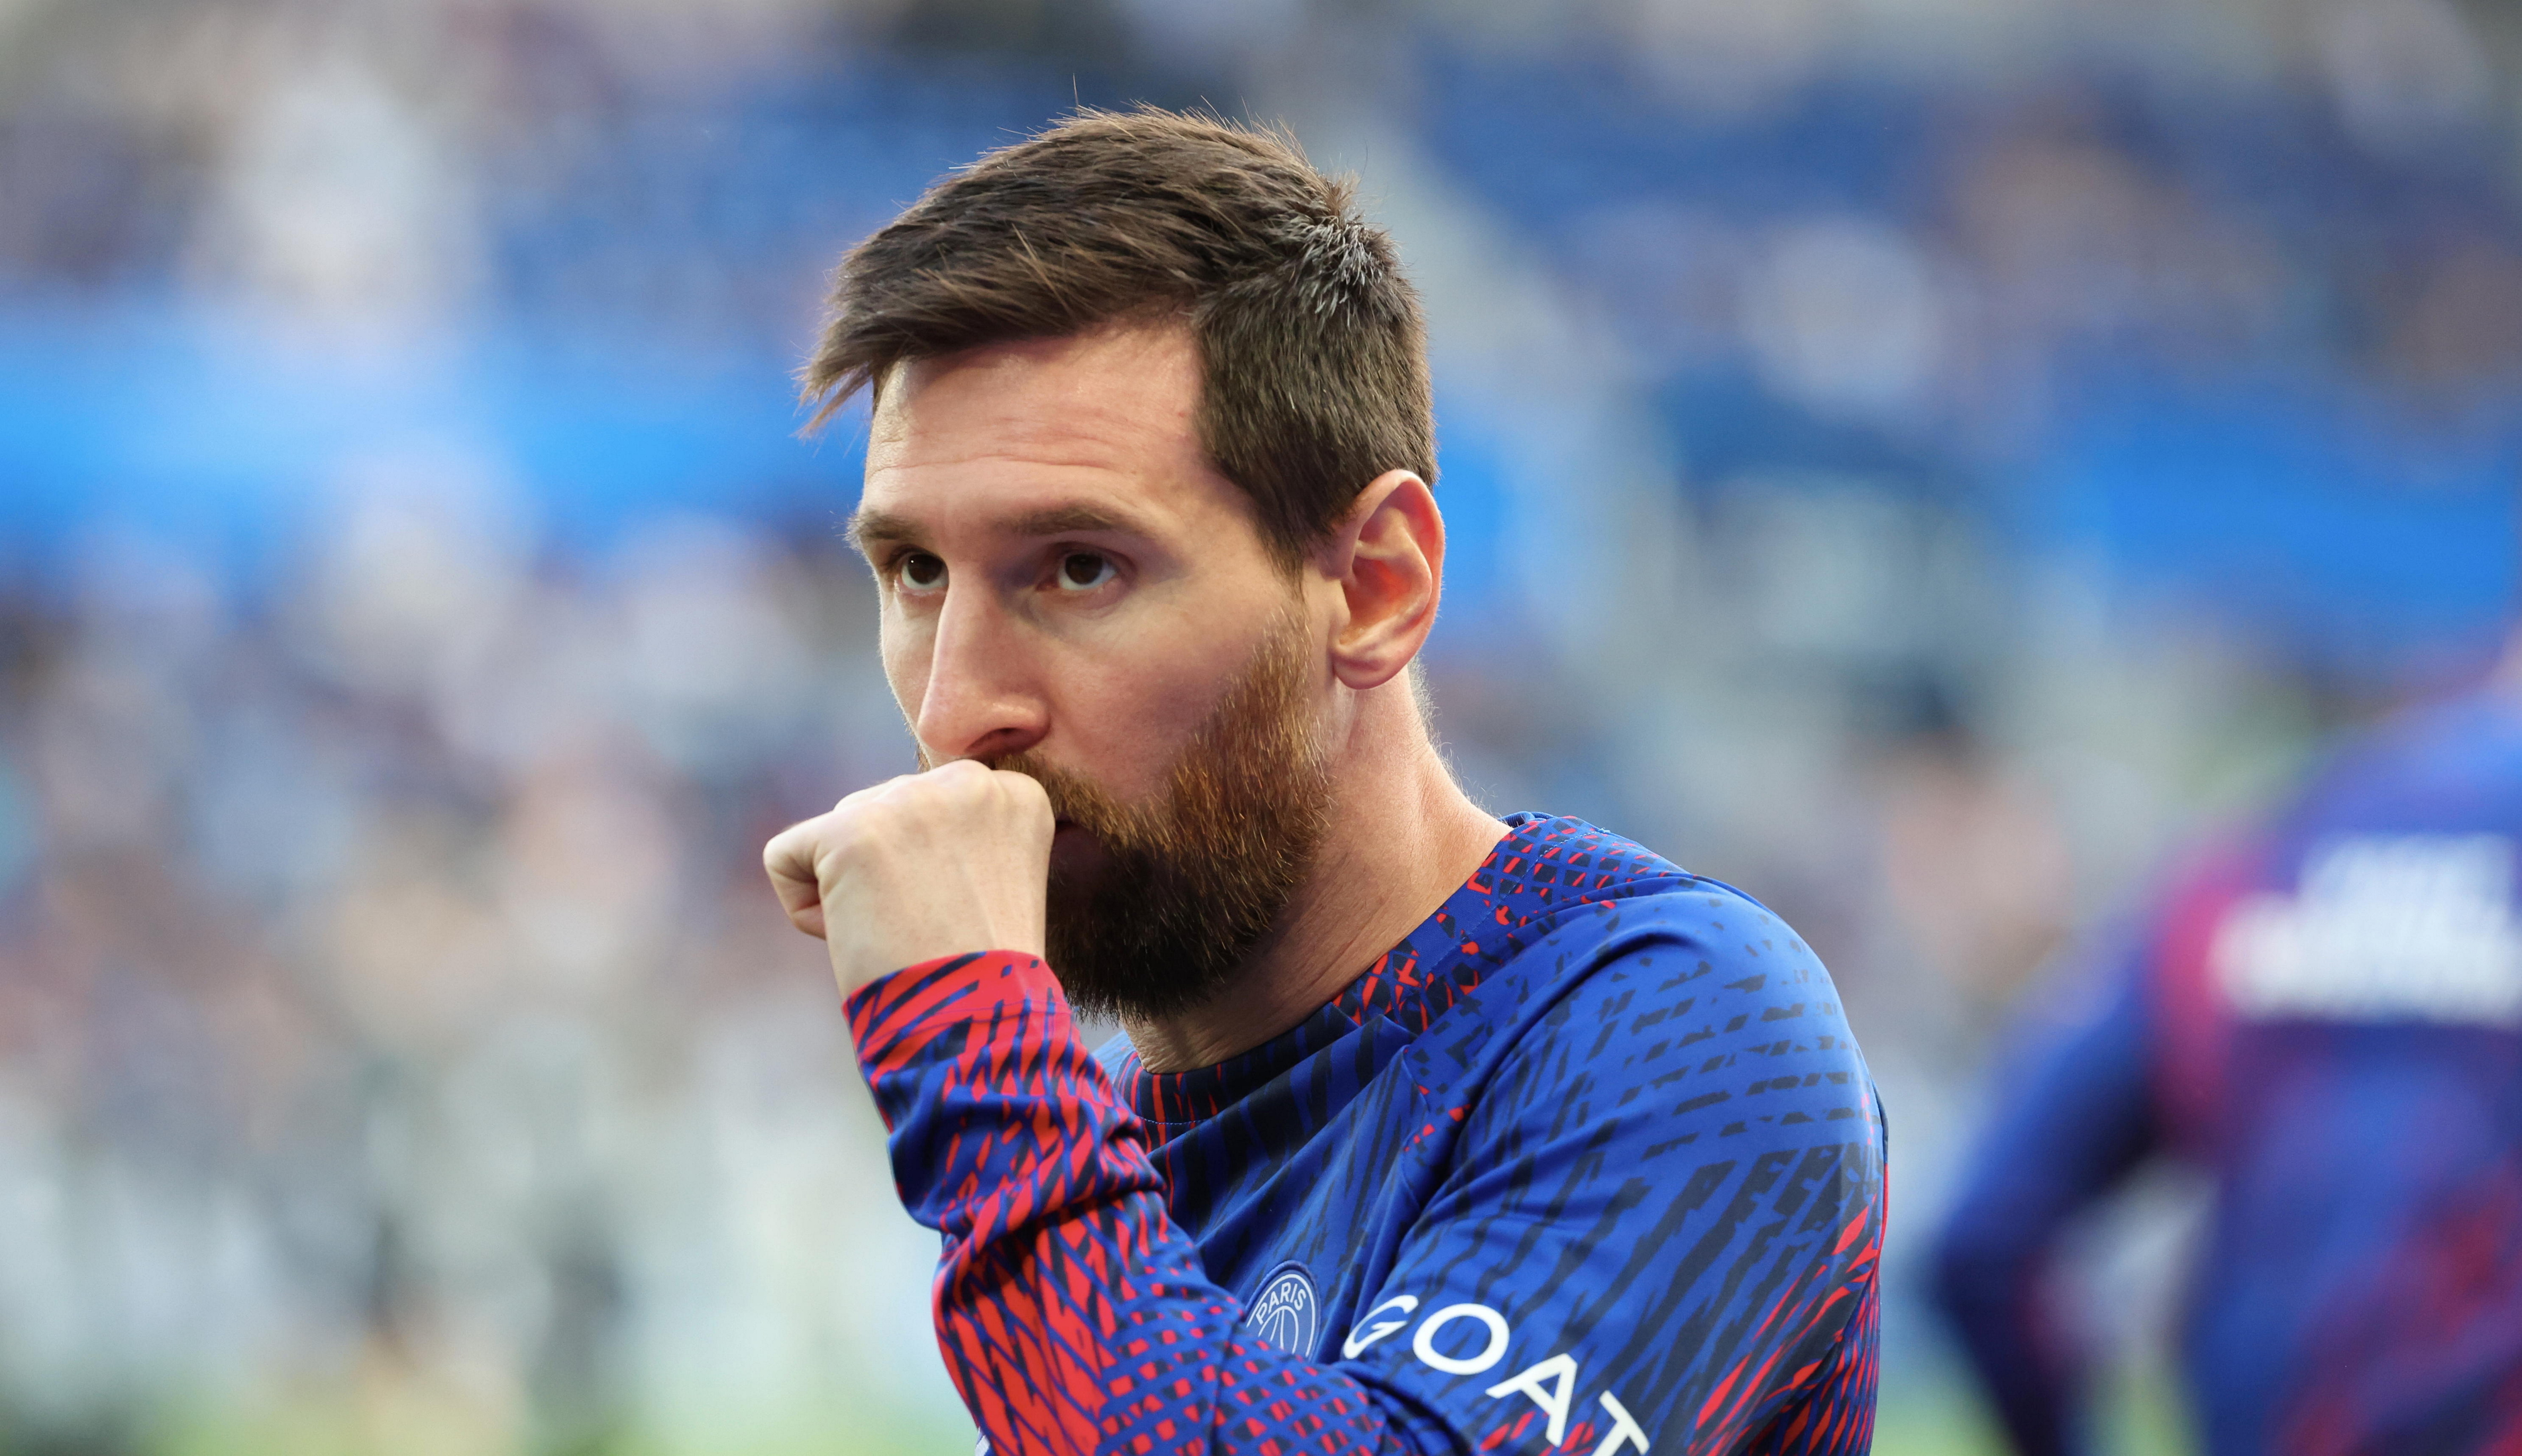 Una locura: revelan valor de camiseta de Inter Miami con dorsal de Messi